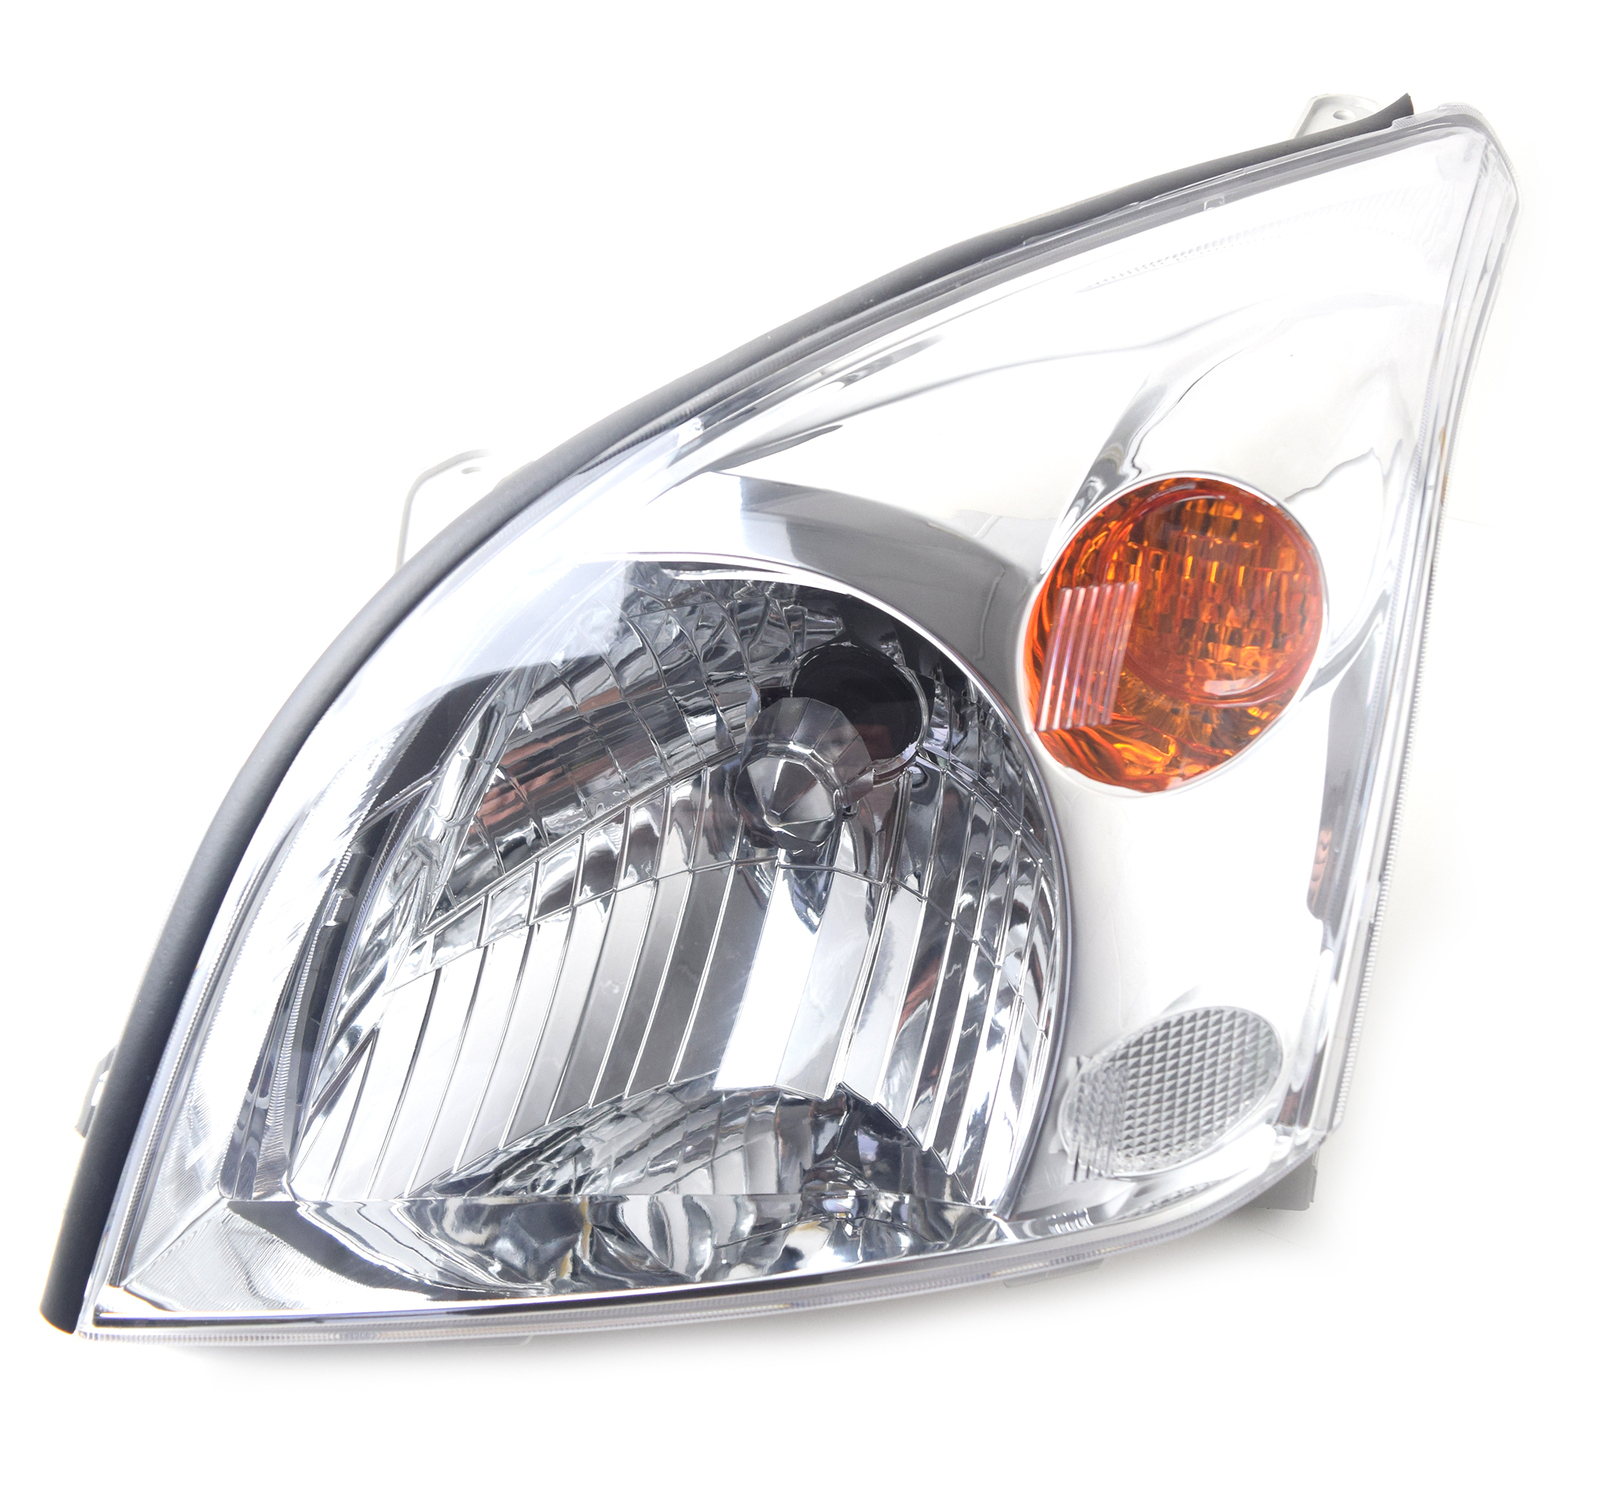 Toyota Landcruiser Prado 120 series LH Headlight Head Light Lamp 2002-2009